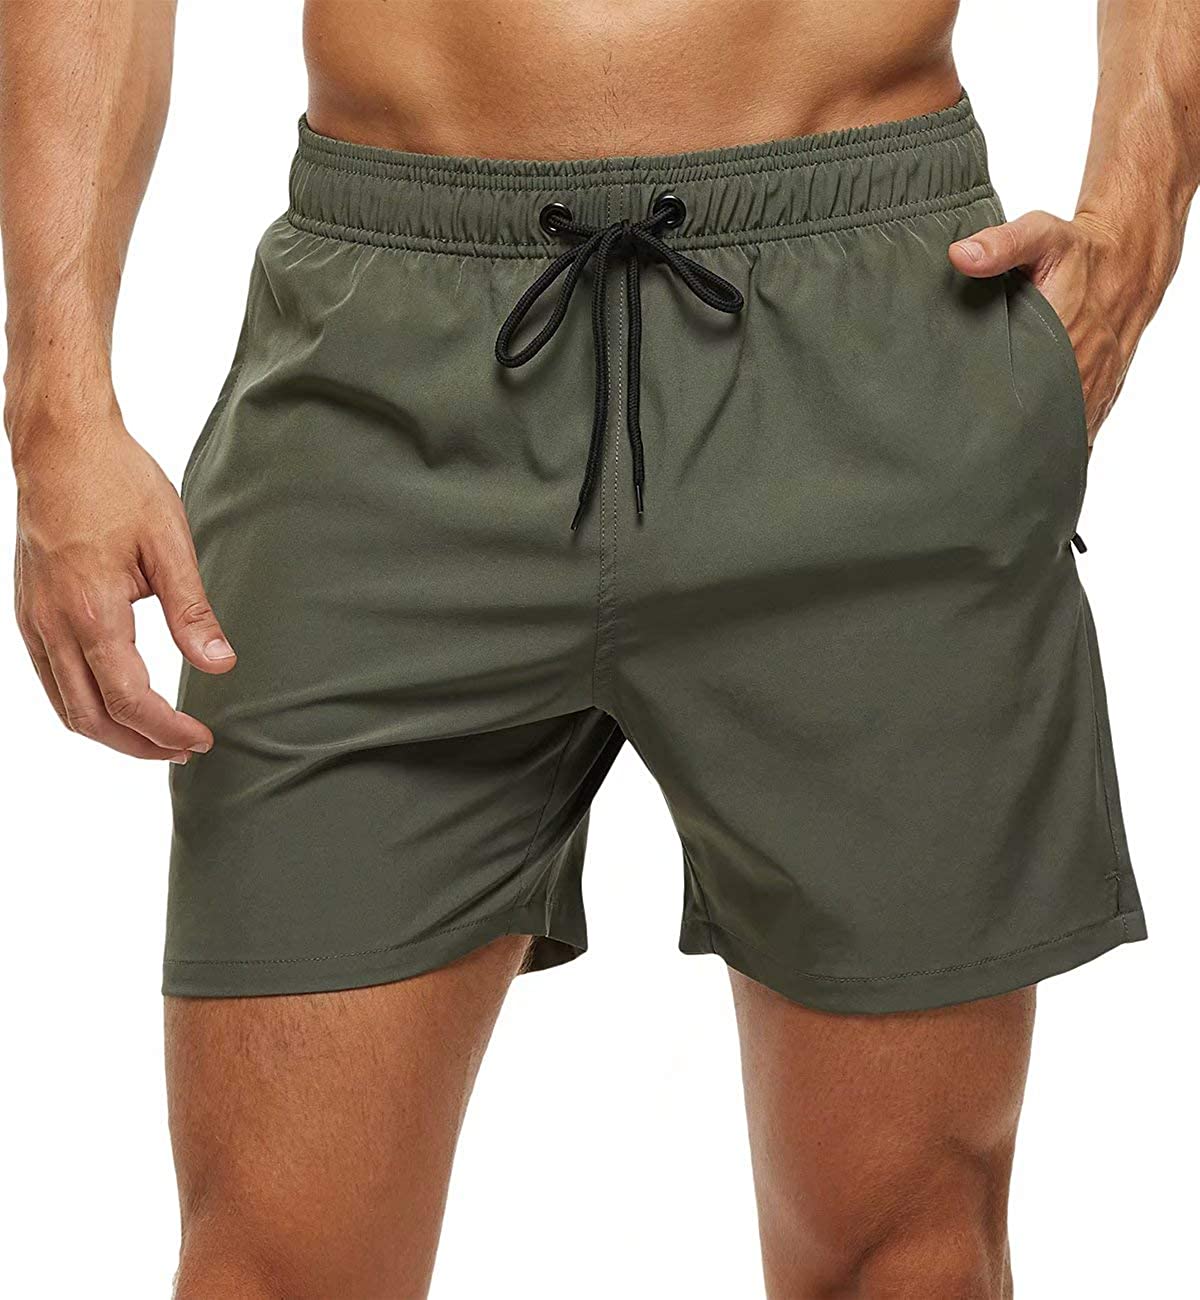 Tyhengta Men's Swim Trunks Quick Dry Beach Shorts with Zipper Pockets and  Mesh L